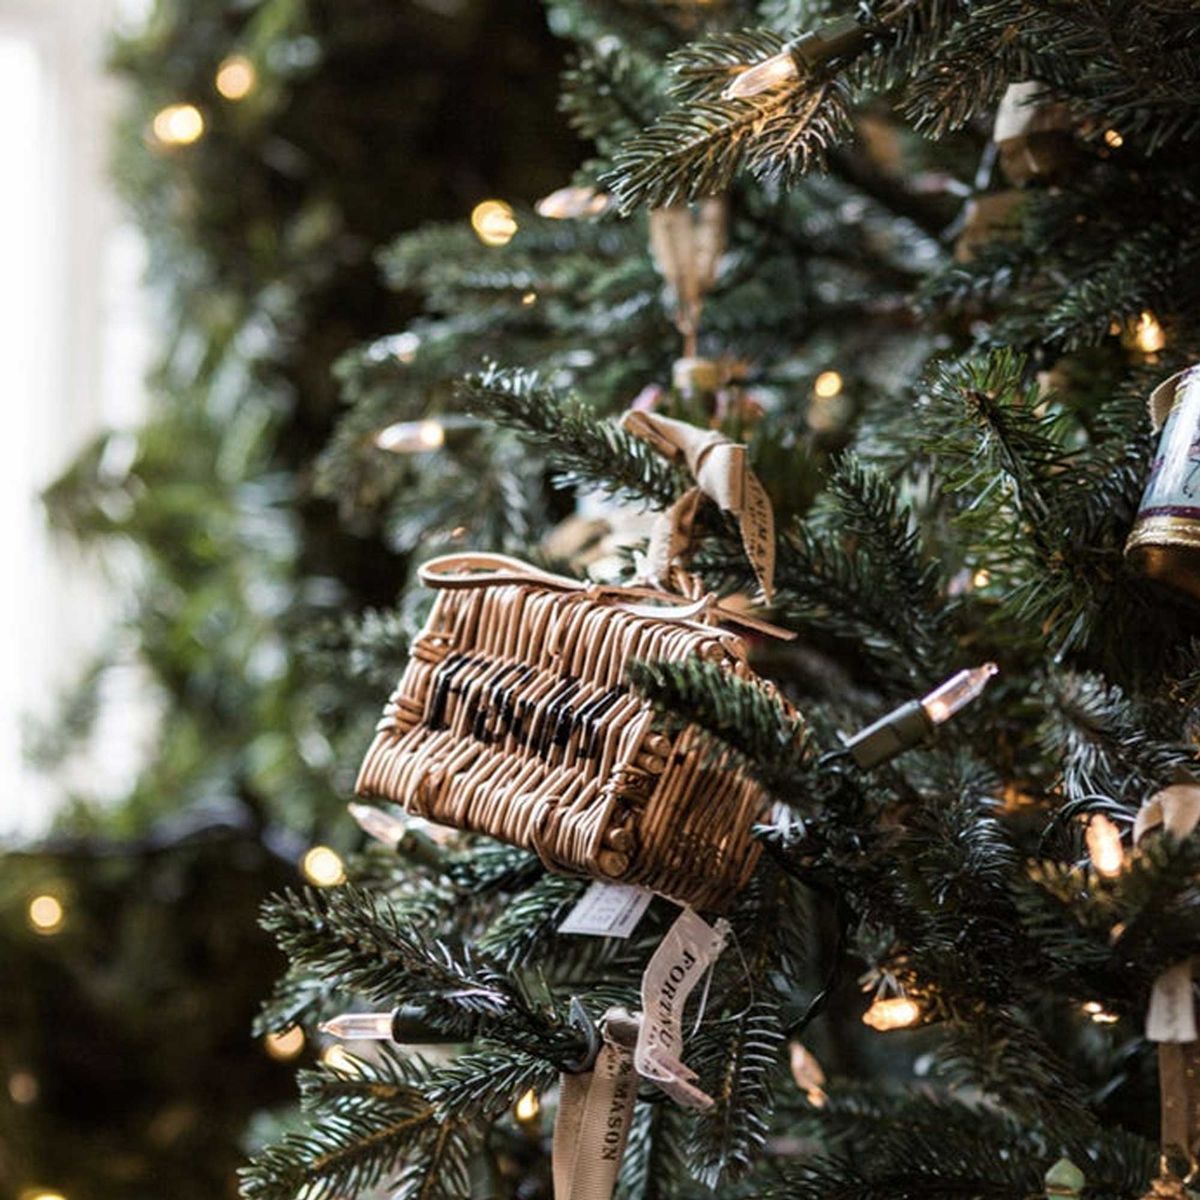 14 Scandinavian Christmas Trees That Will Bring You Joy